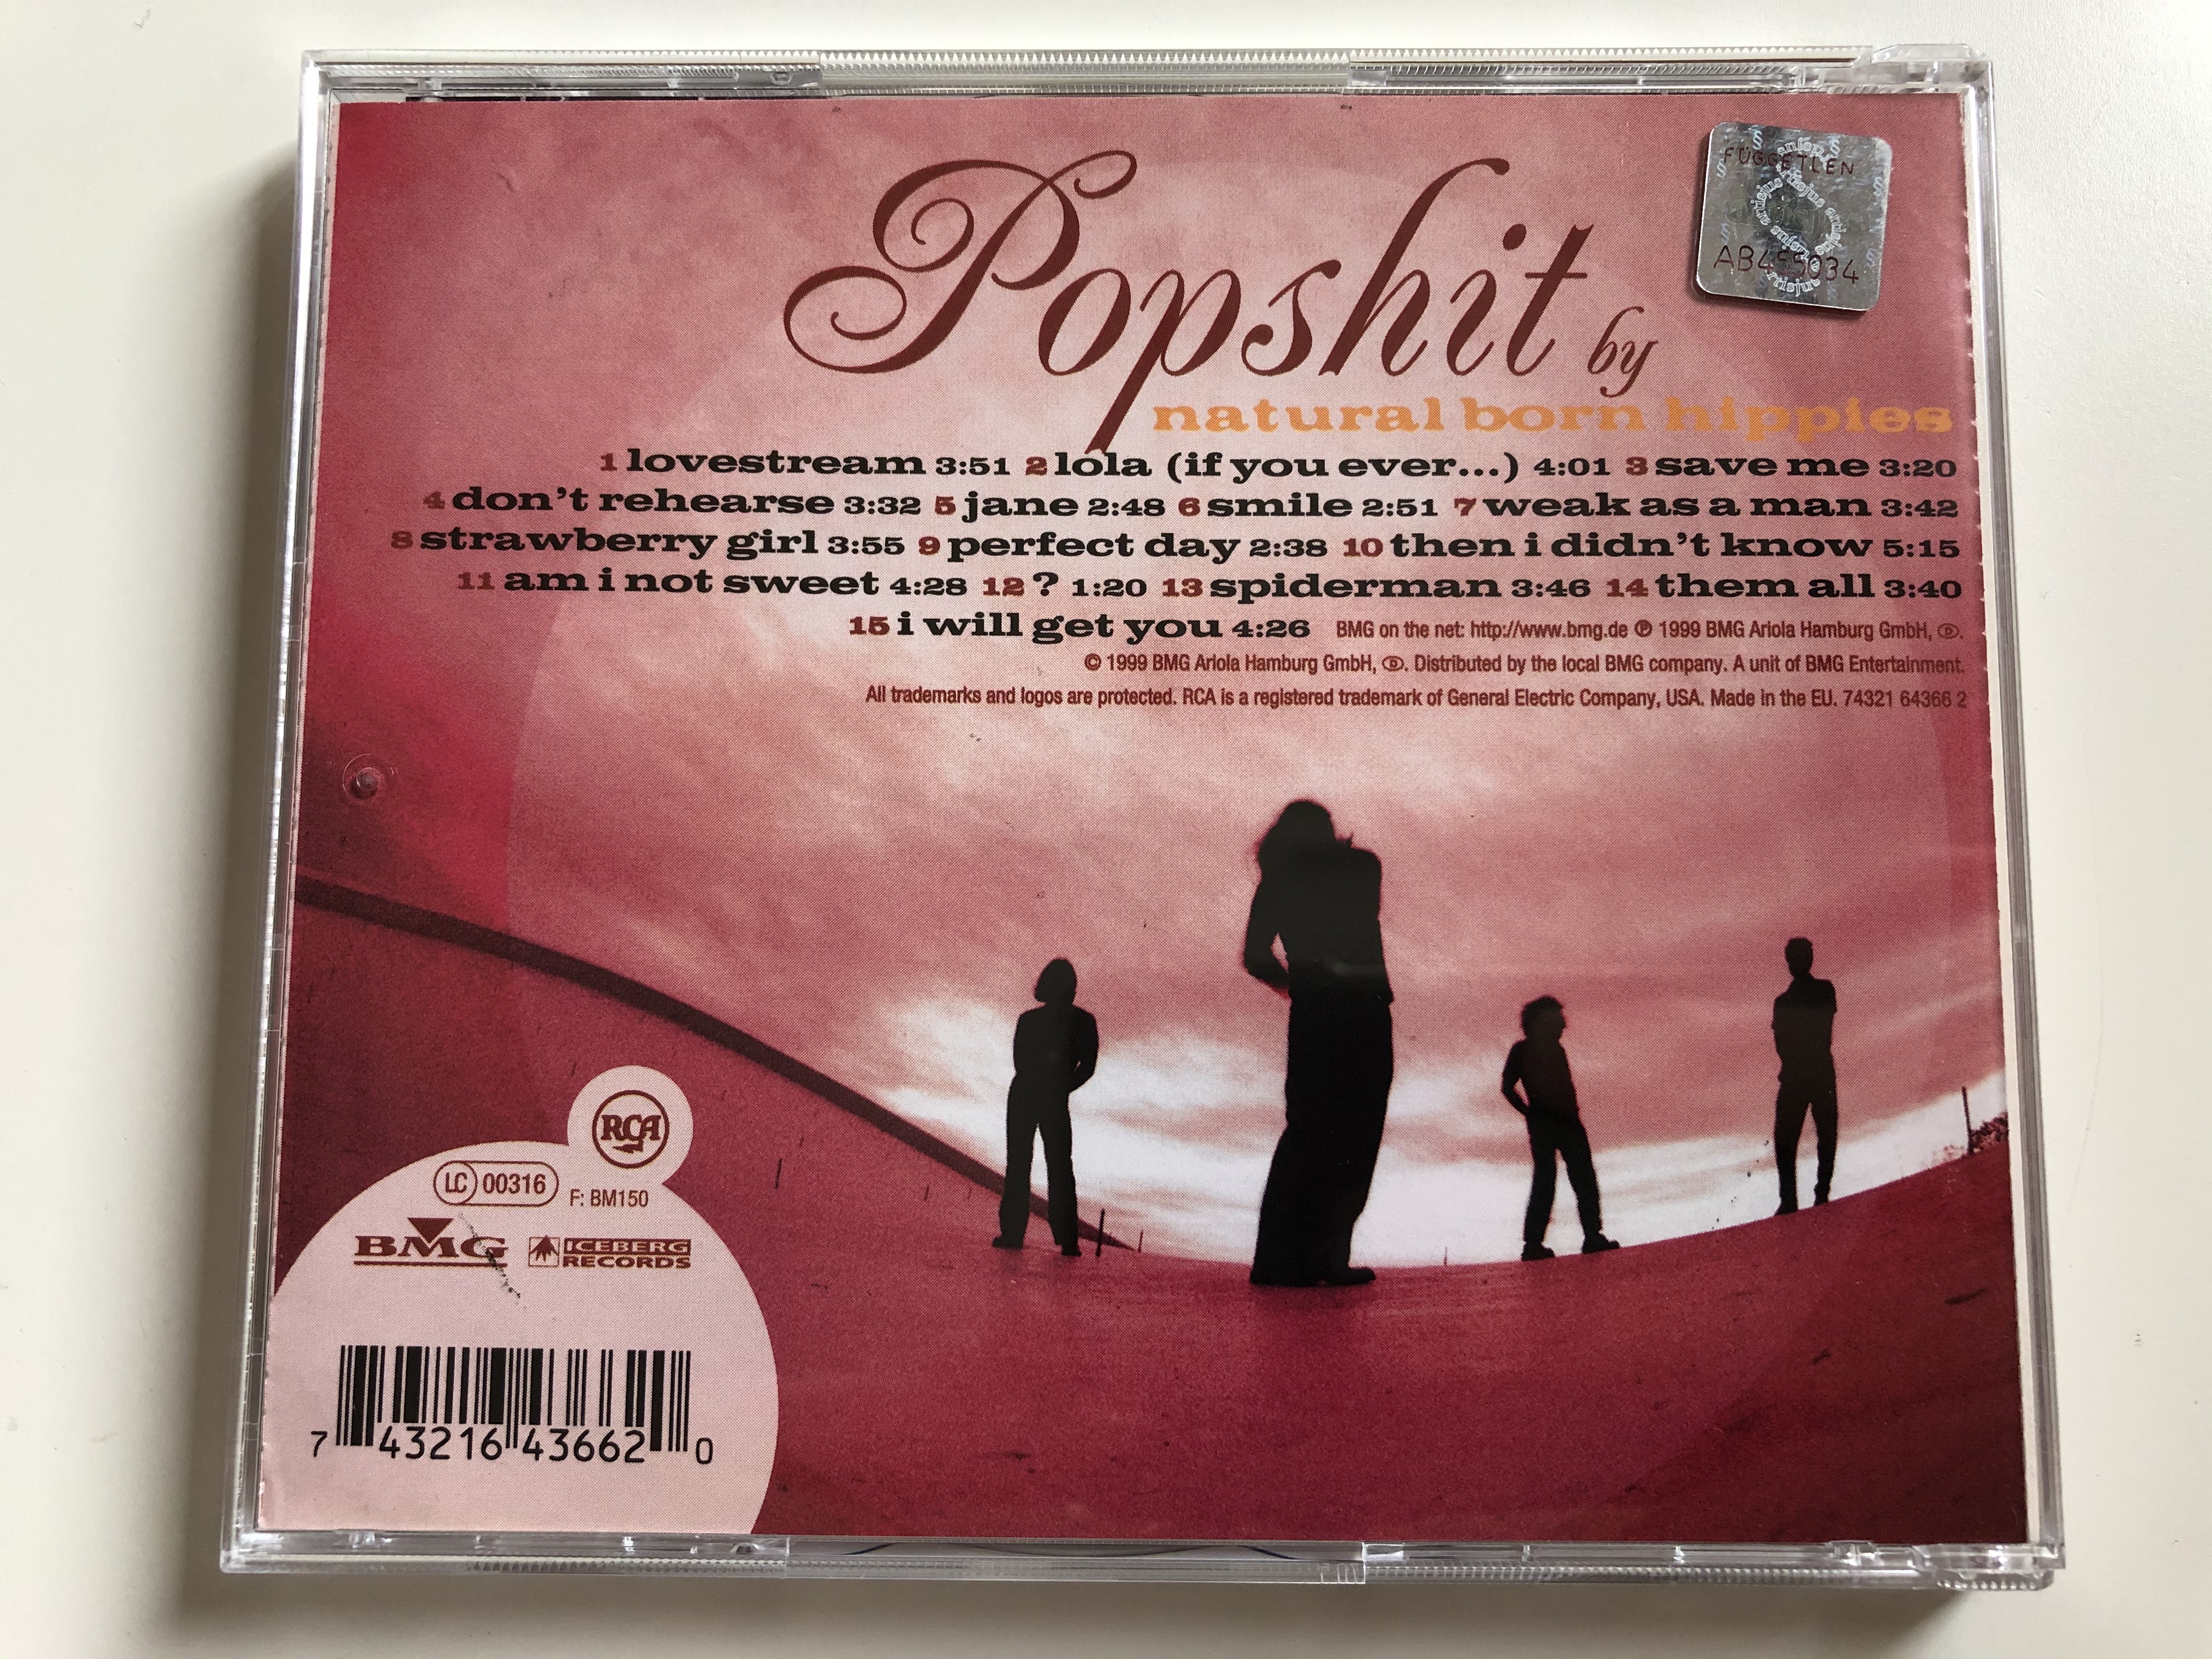 popshit-by-natural-born-hippies-rca-audio-cd-1999-74321-64366-2-2-.jpg